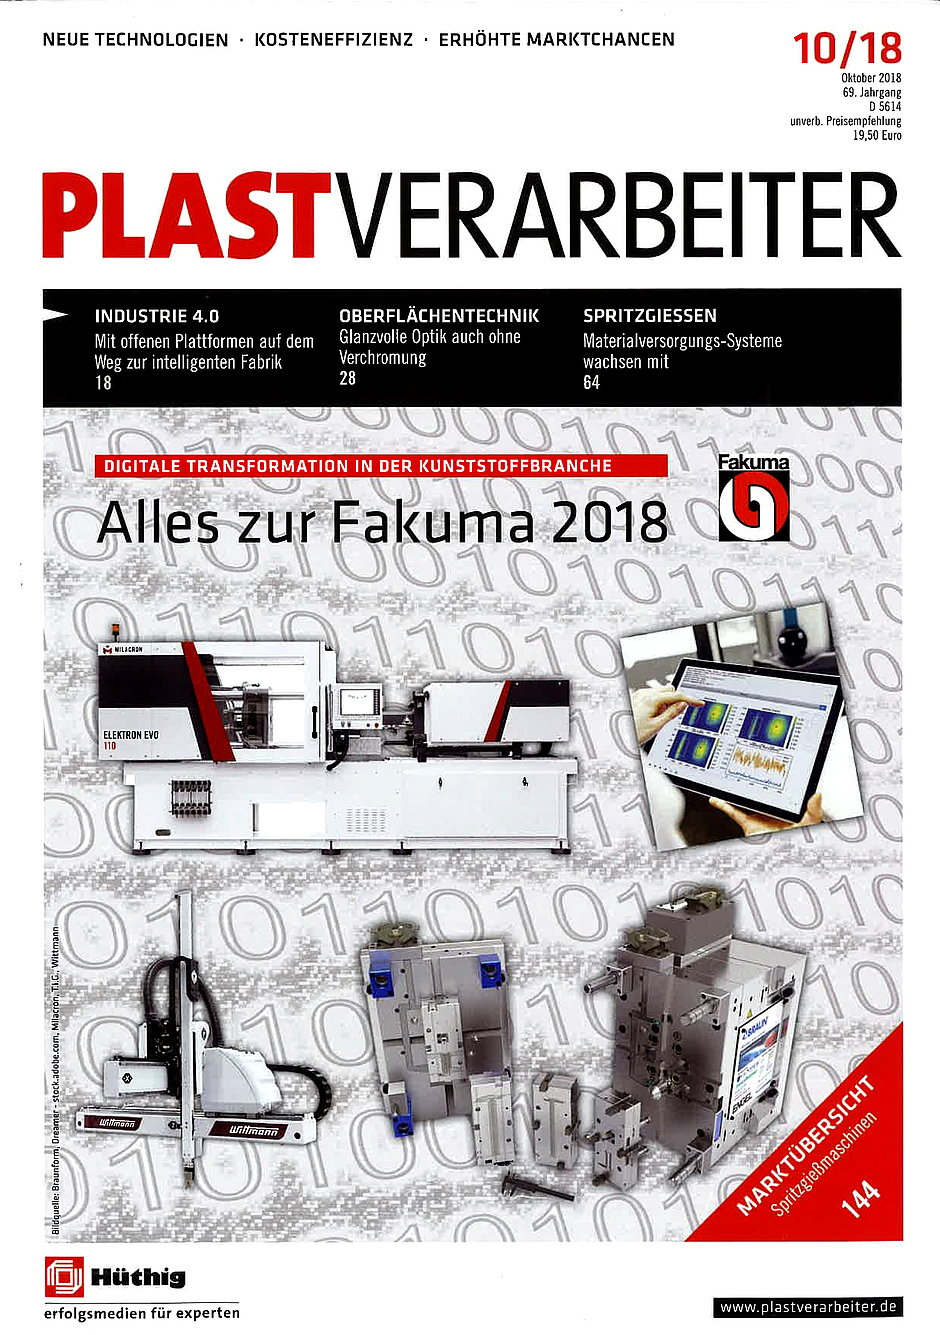 ASP Presse News - Vario Puffer Förderband im Plastverarbeiter.